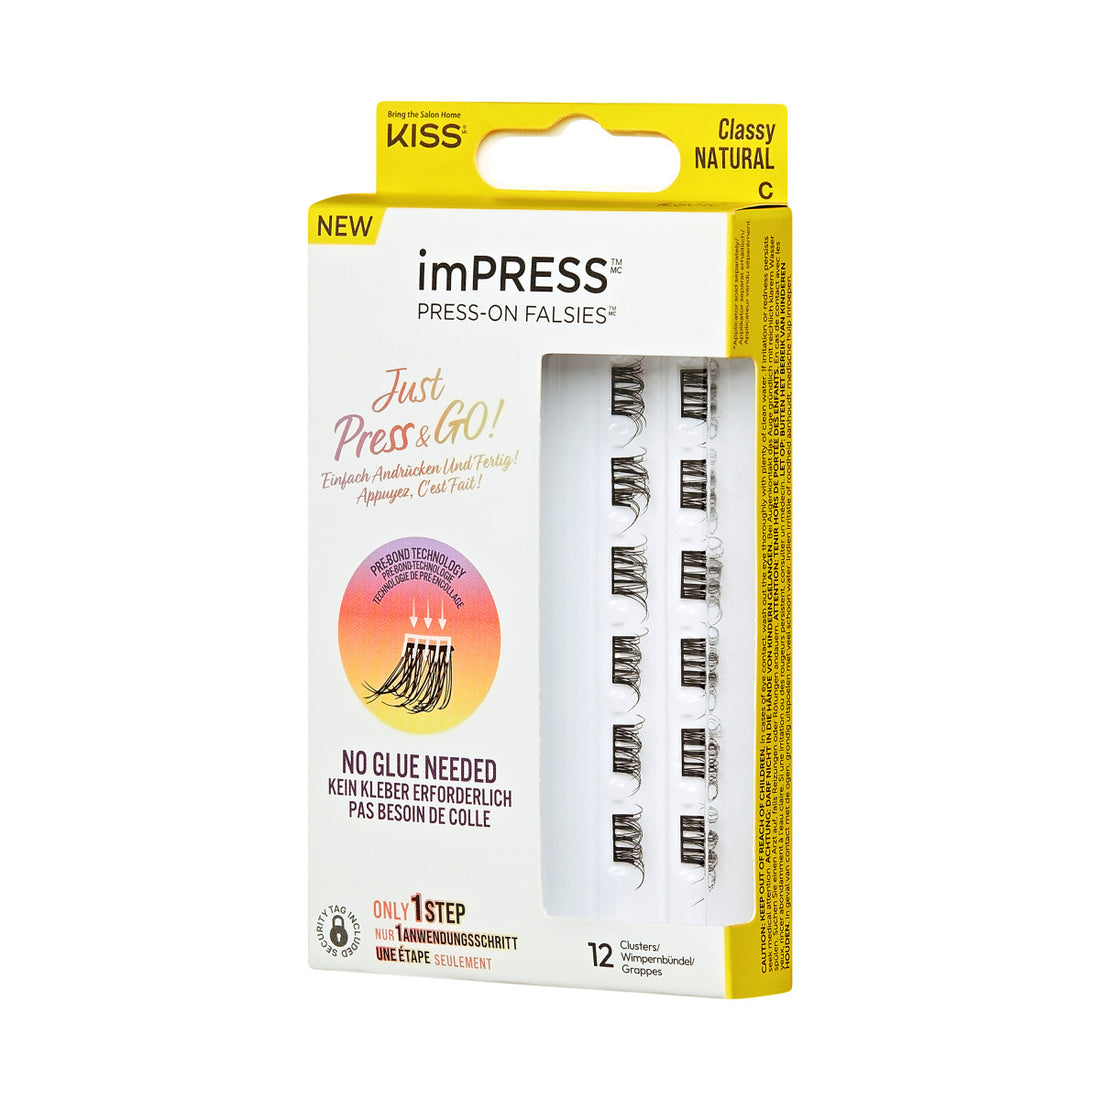 imPRESS Press-On Falsies Eyelash Clusters Minipack, Natural, Classy, 12 ks